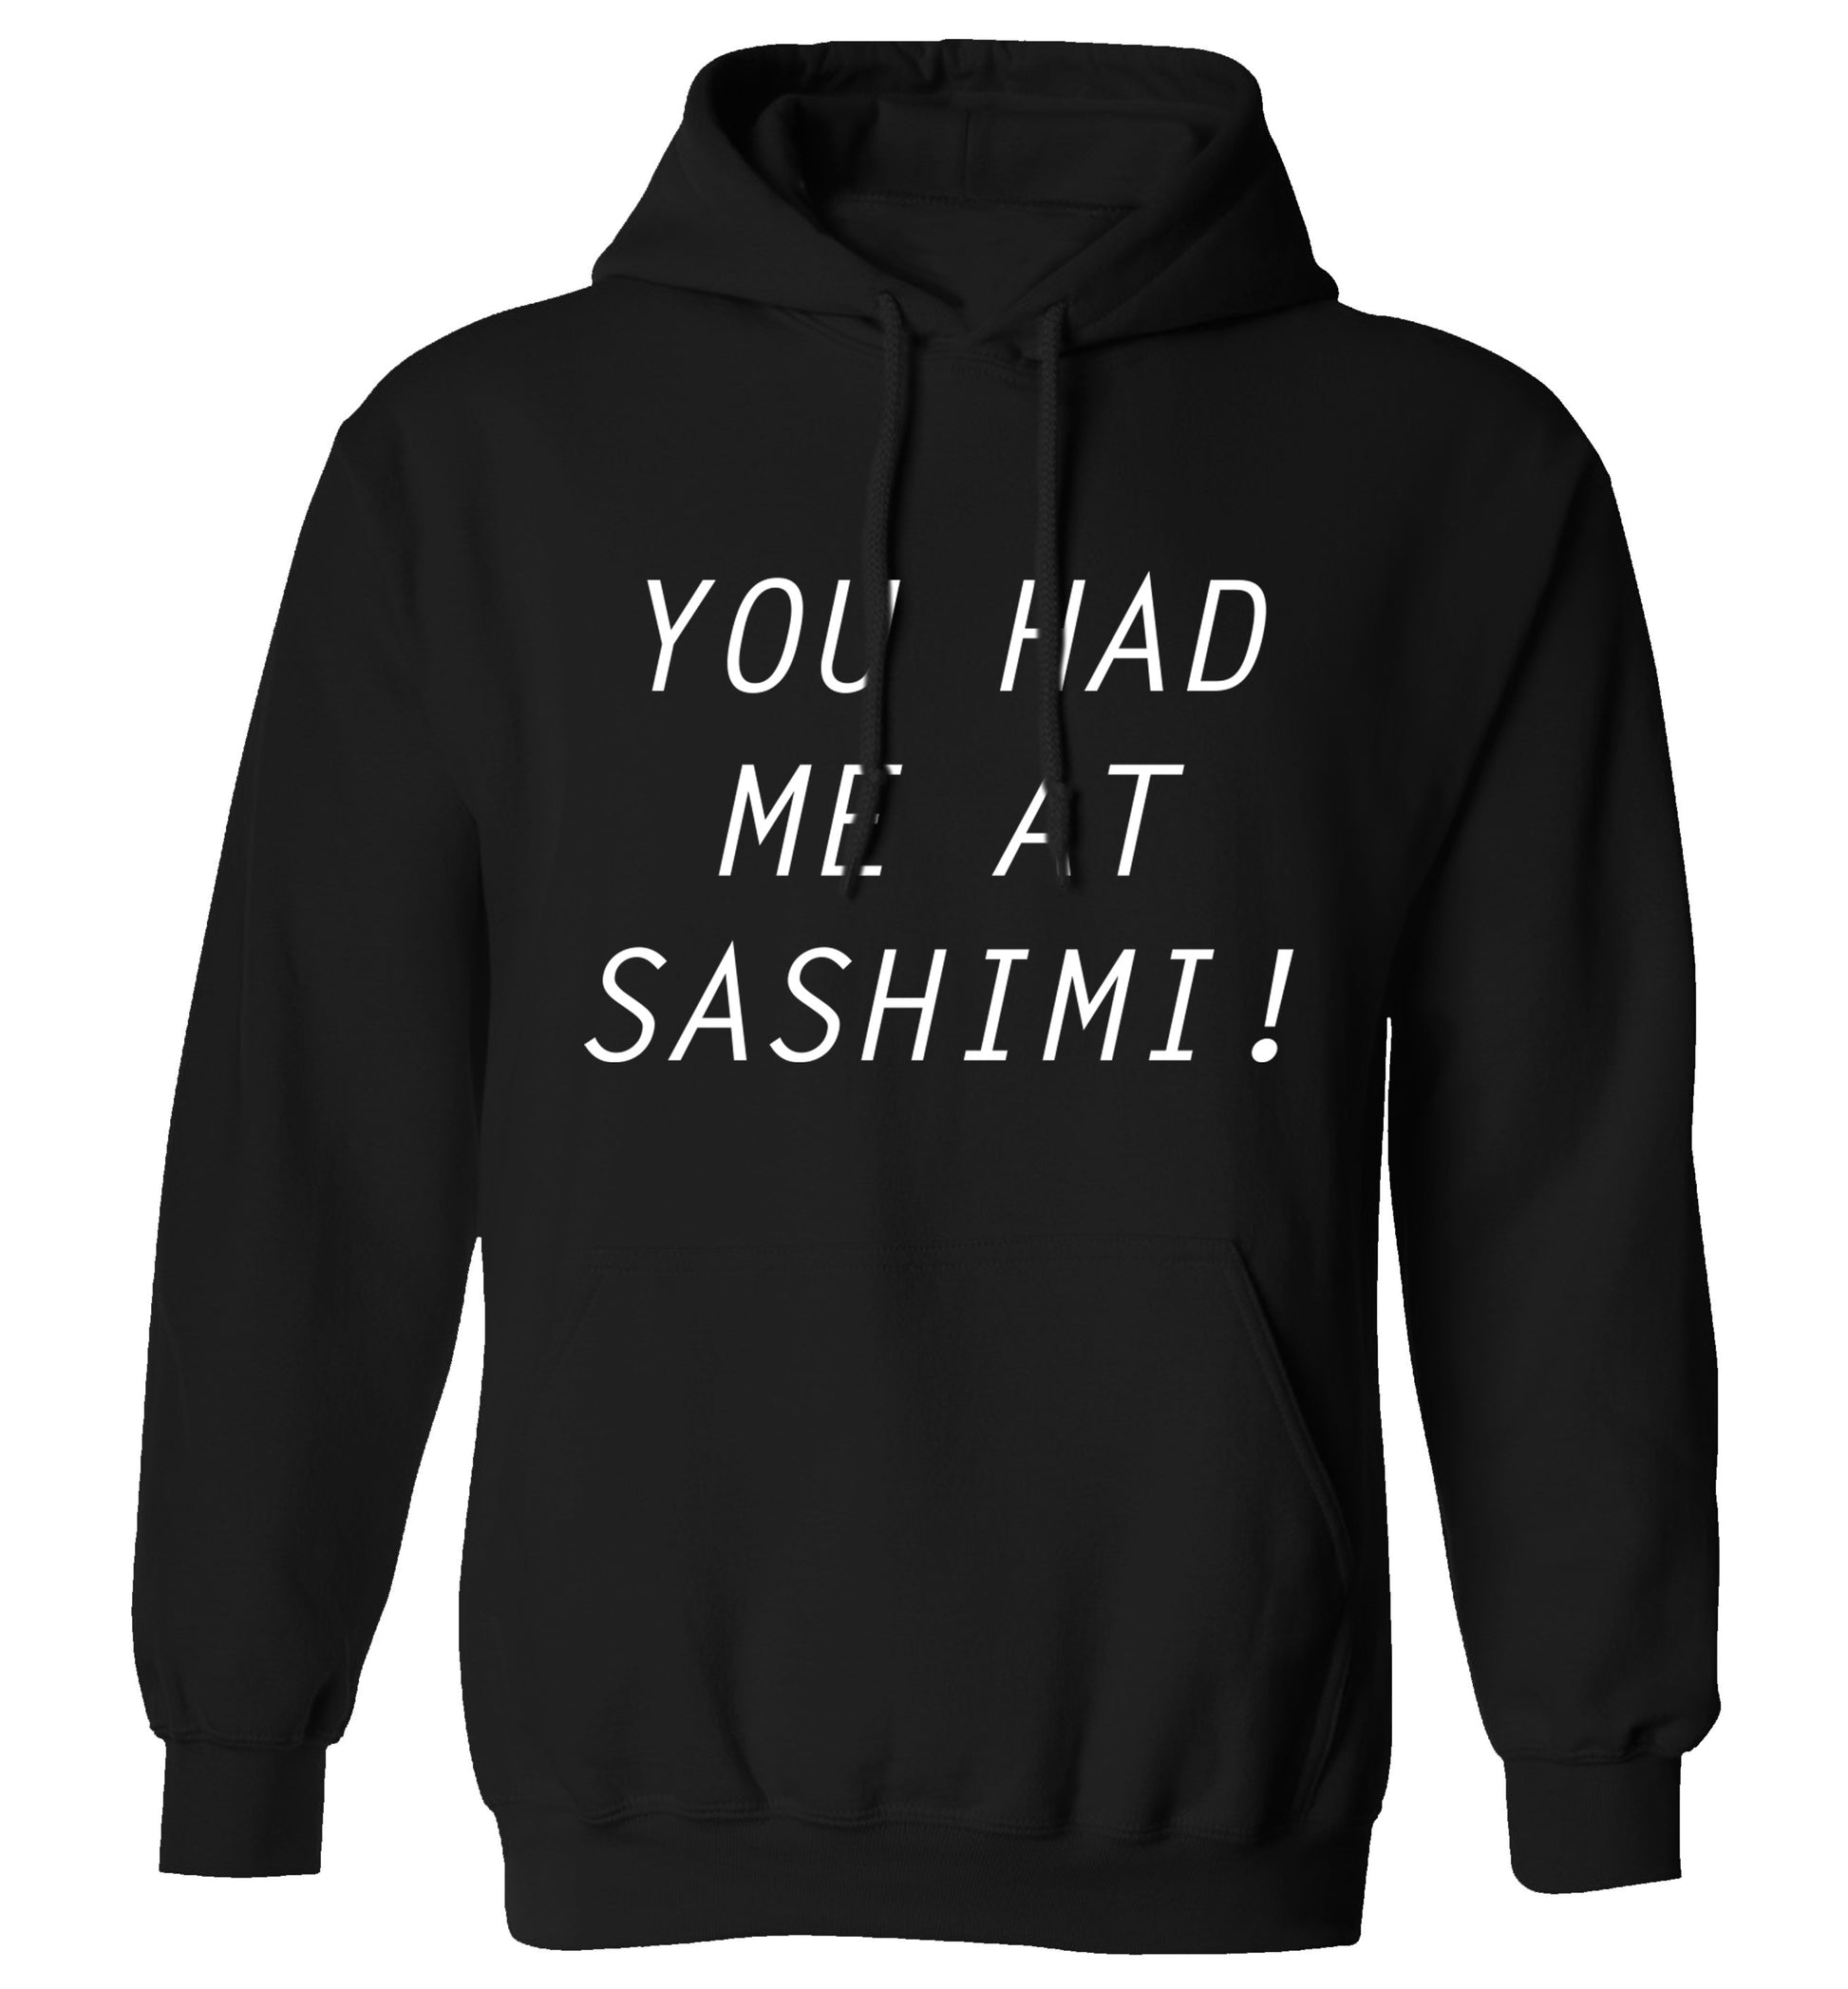 You had me at sashimi adults unisex black hoodie 2XL